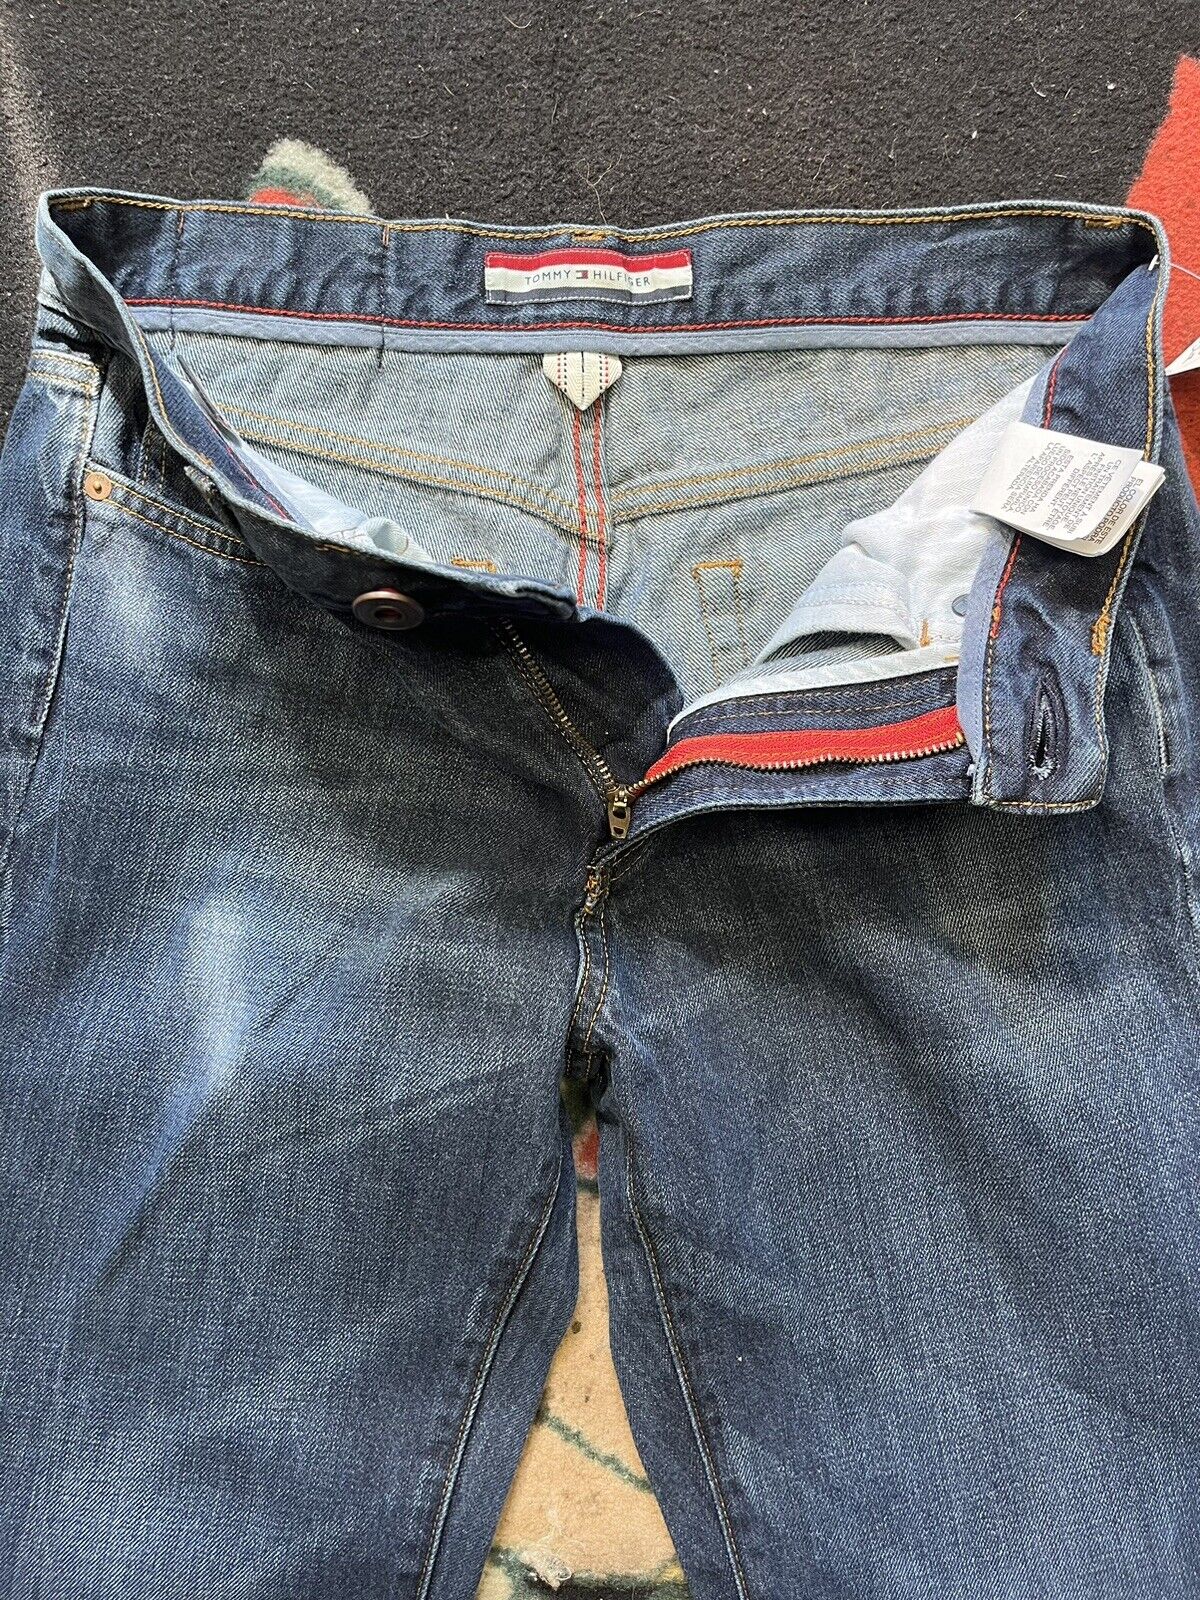 Tommy Hilfiger Jeans Size 29x30 - image 3